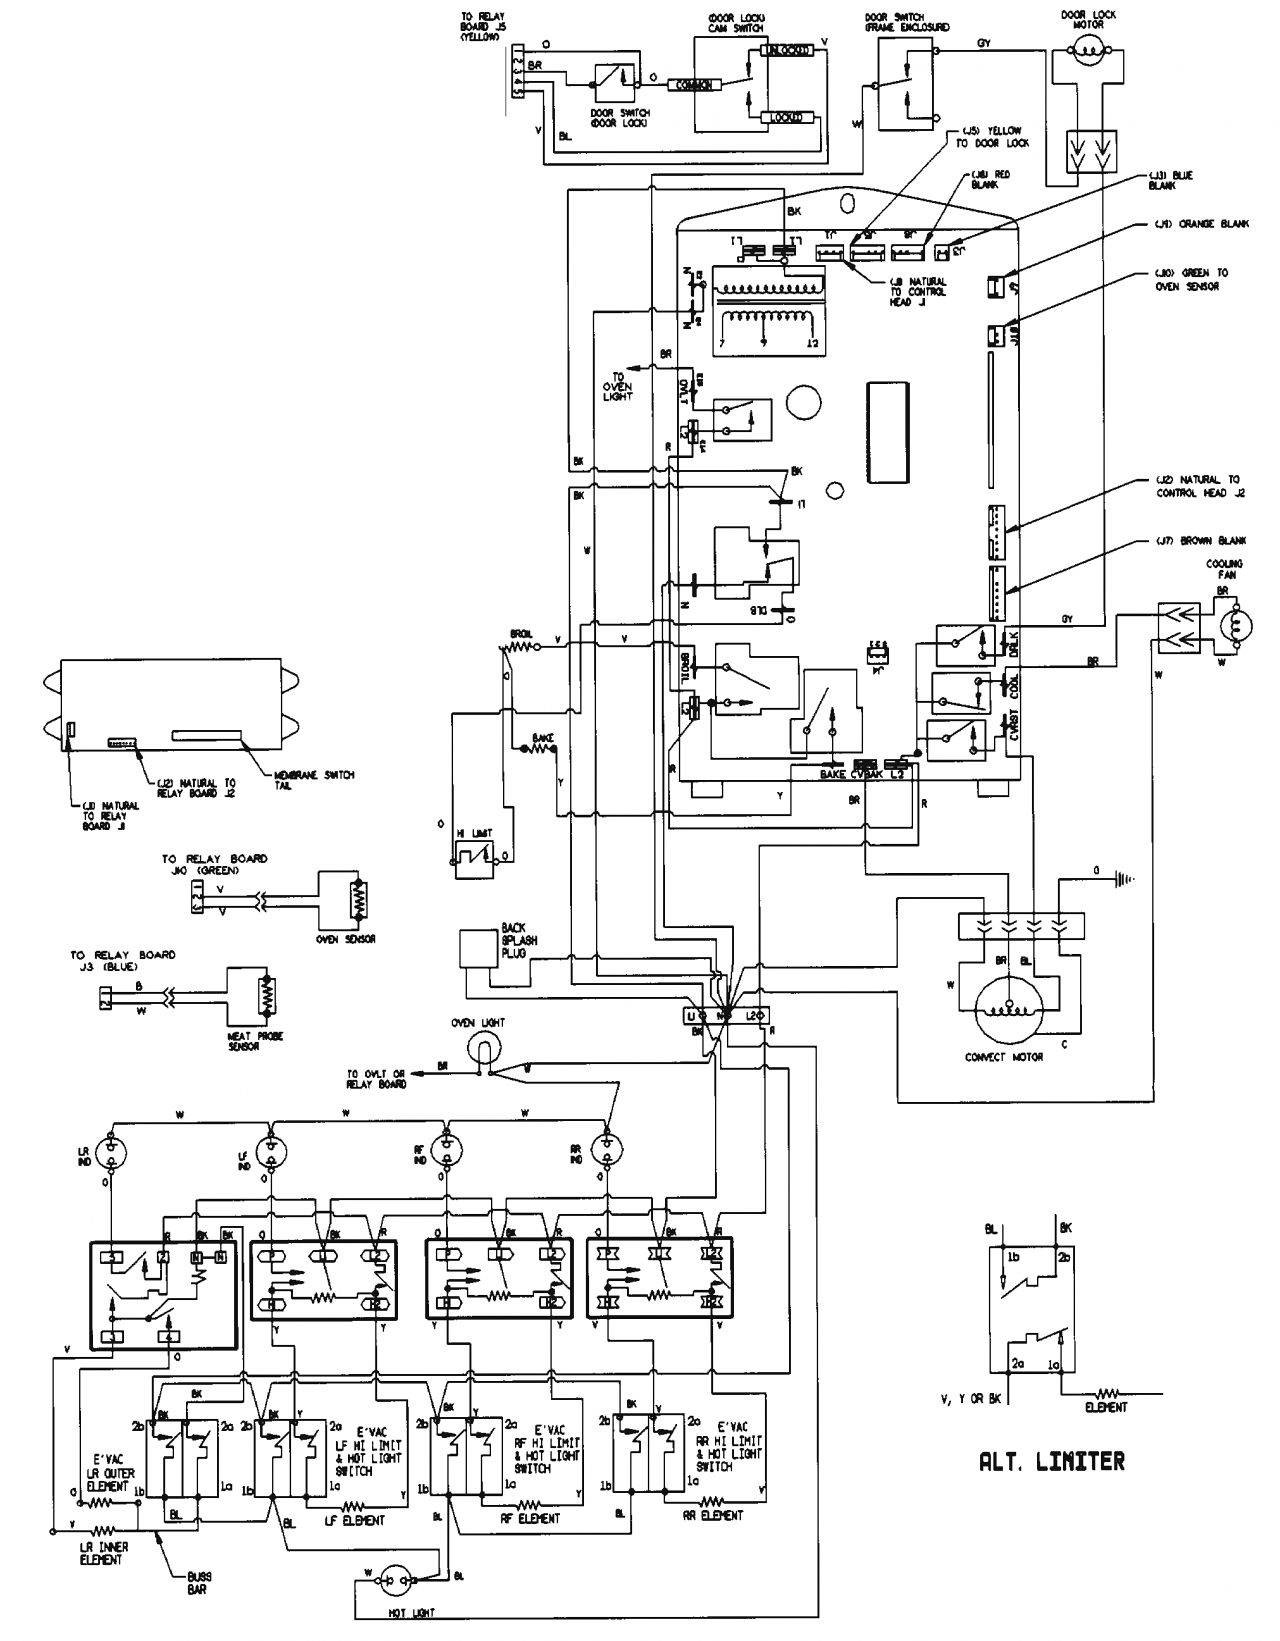 Intermatic T103 Wiring Diagram Download - Wiring Diagram Sample